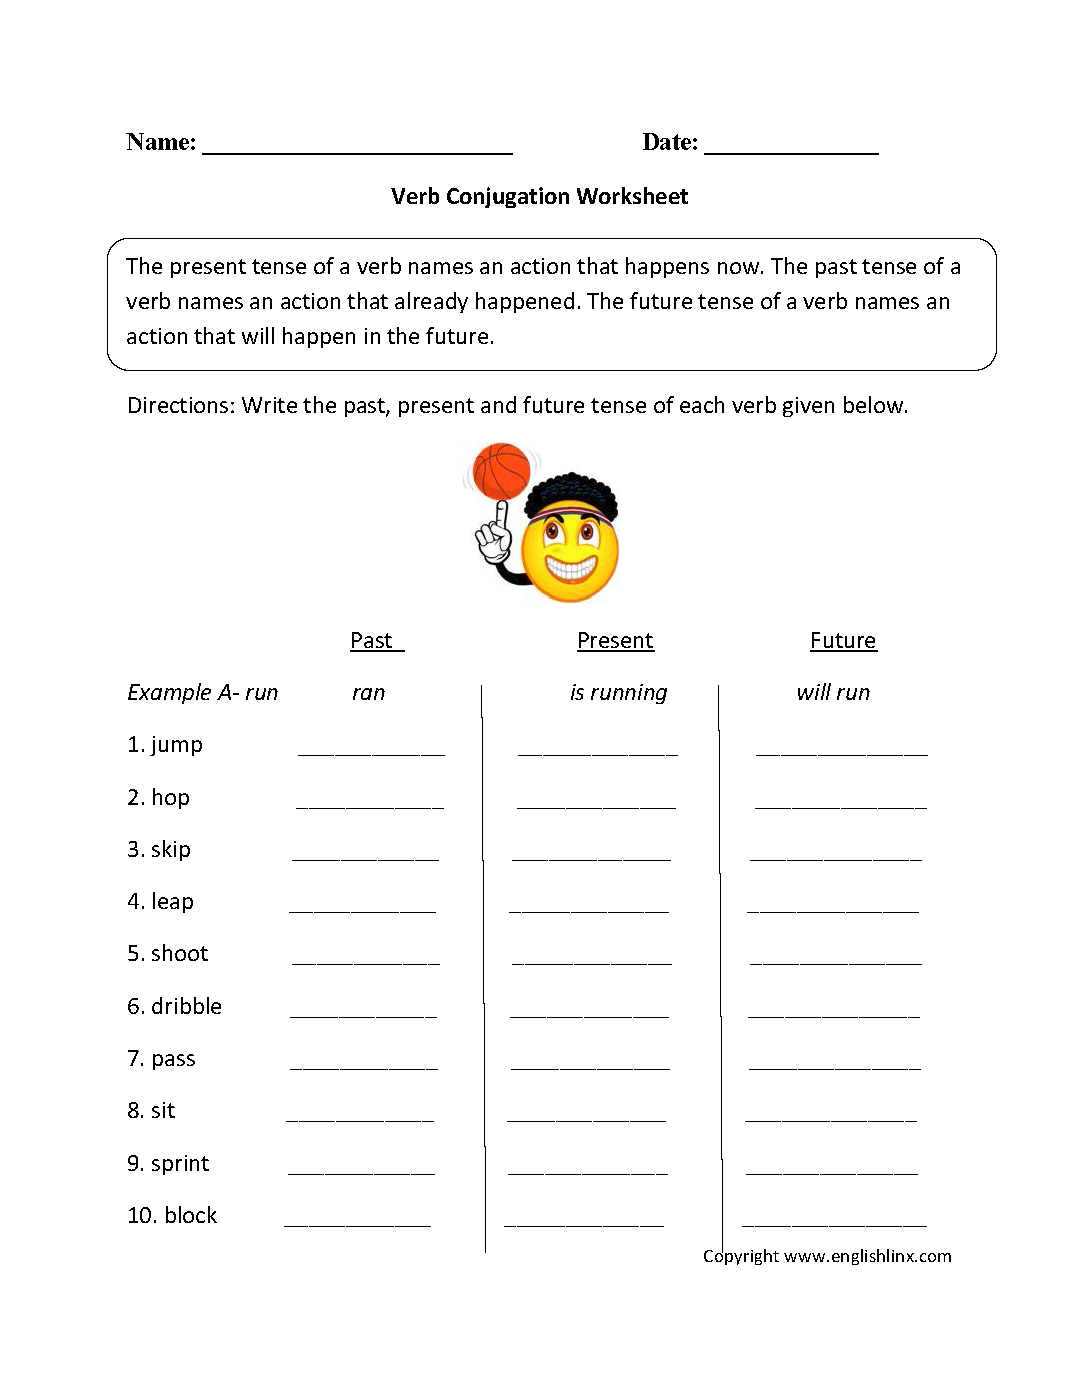 subject-verb-agreement-worksheets-grade-6-pdf-worksheet-resume-examples